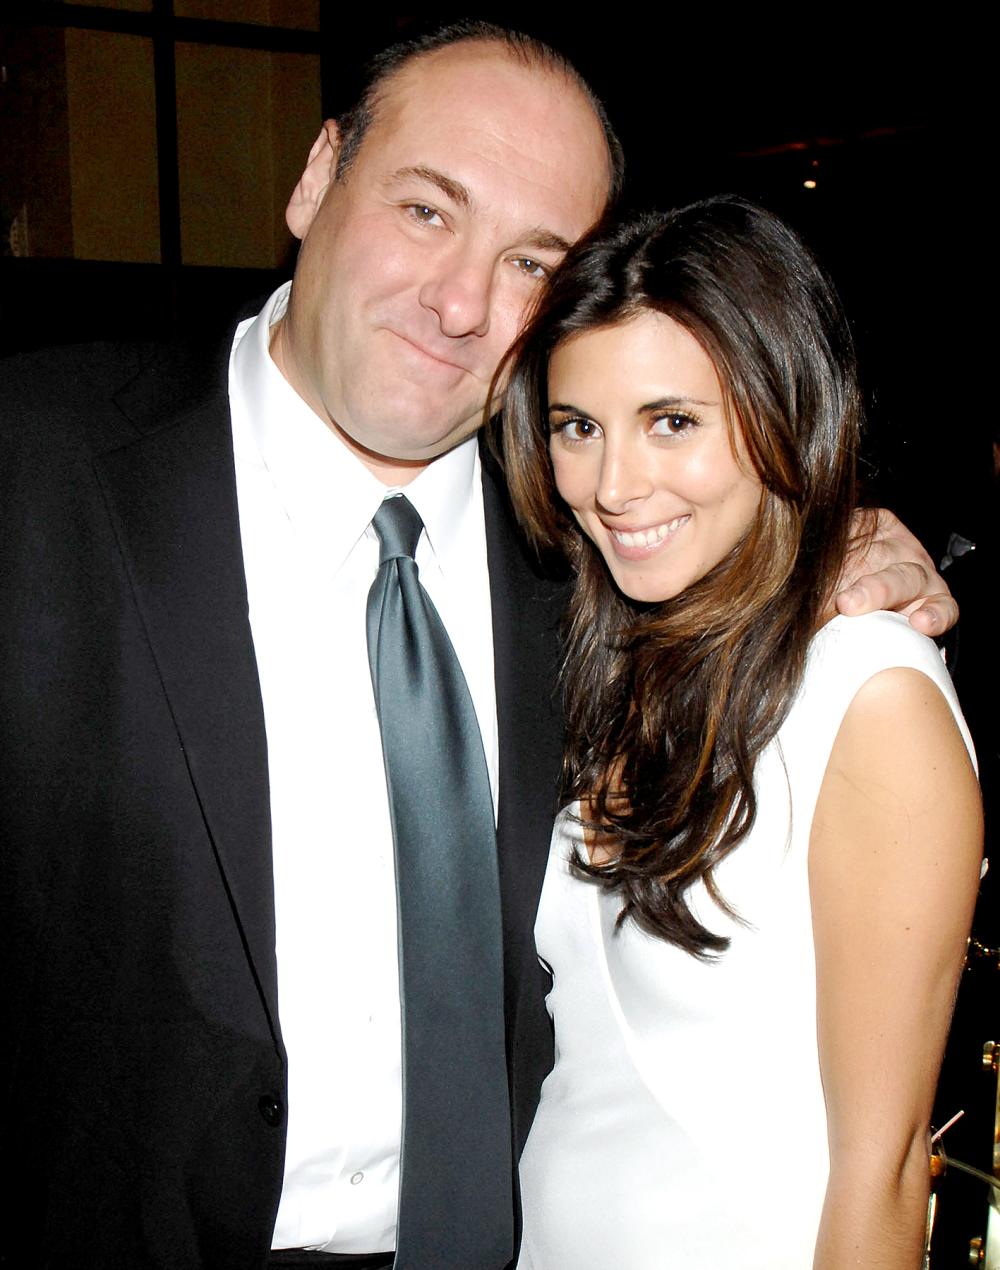 James Gandolfini and Jamie-Lynn Sigler in 2007.